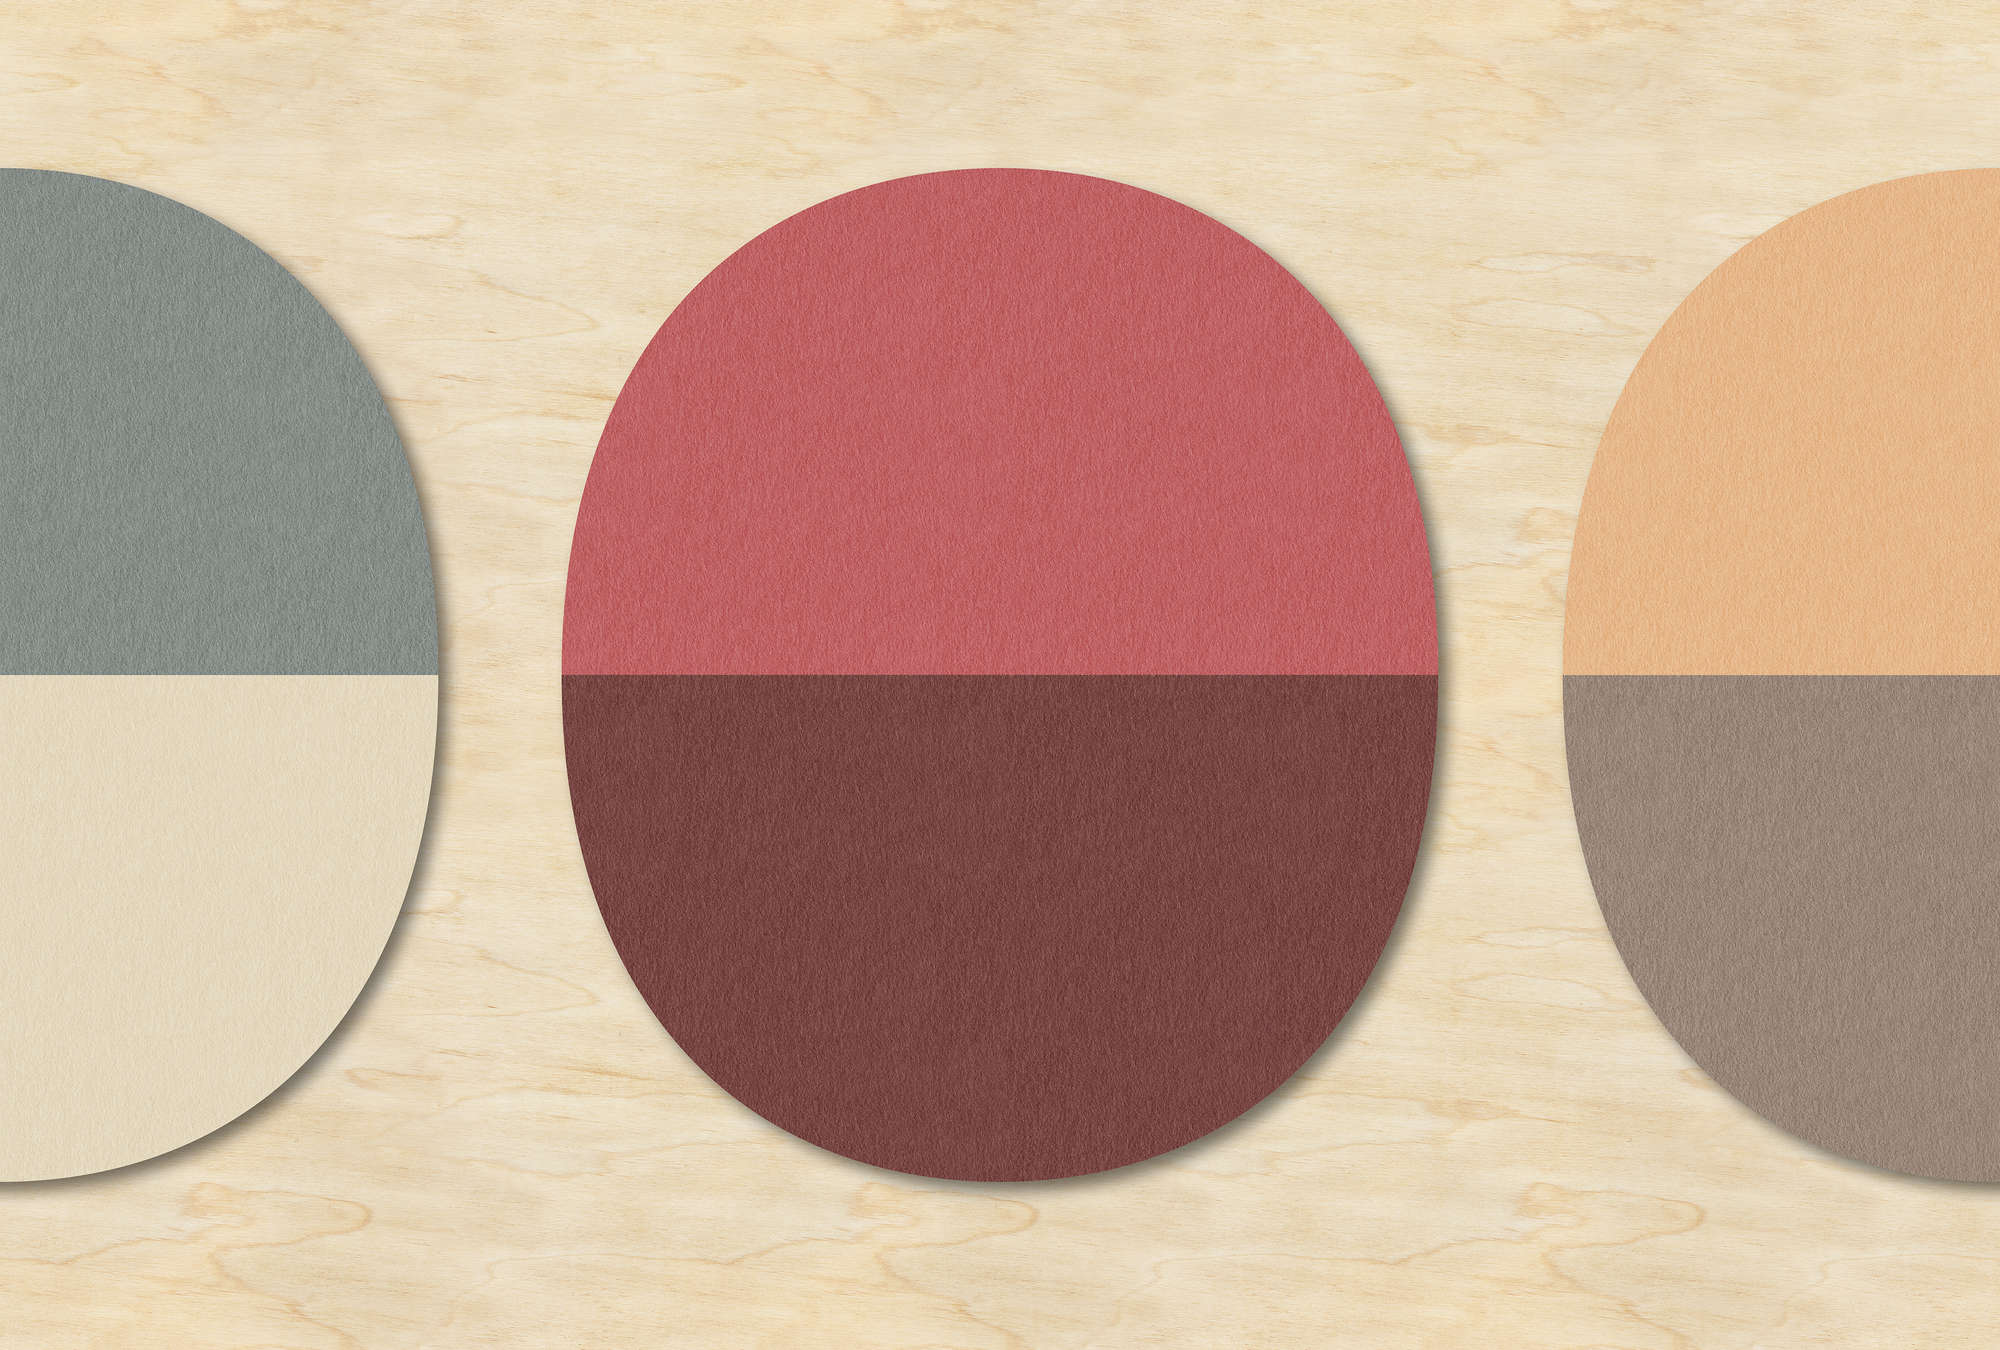             Split ovals 3 - Colourful Wallpaper Oval Retro Pattern - Plywood,Felt Texture - Beige, Blue | Matt Smooth Non-woven
        